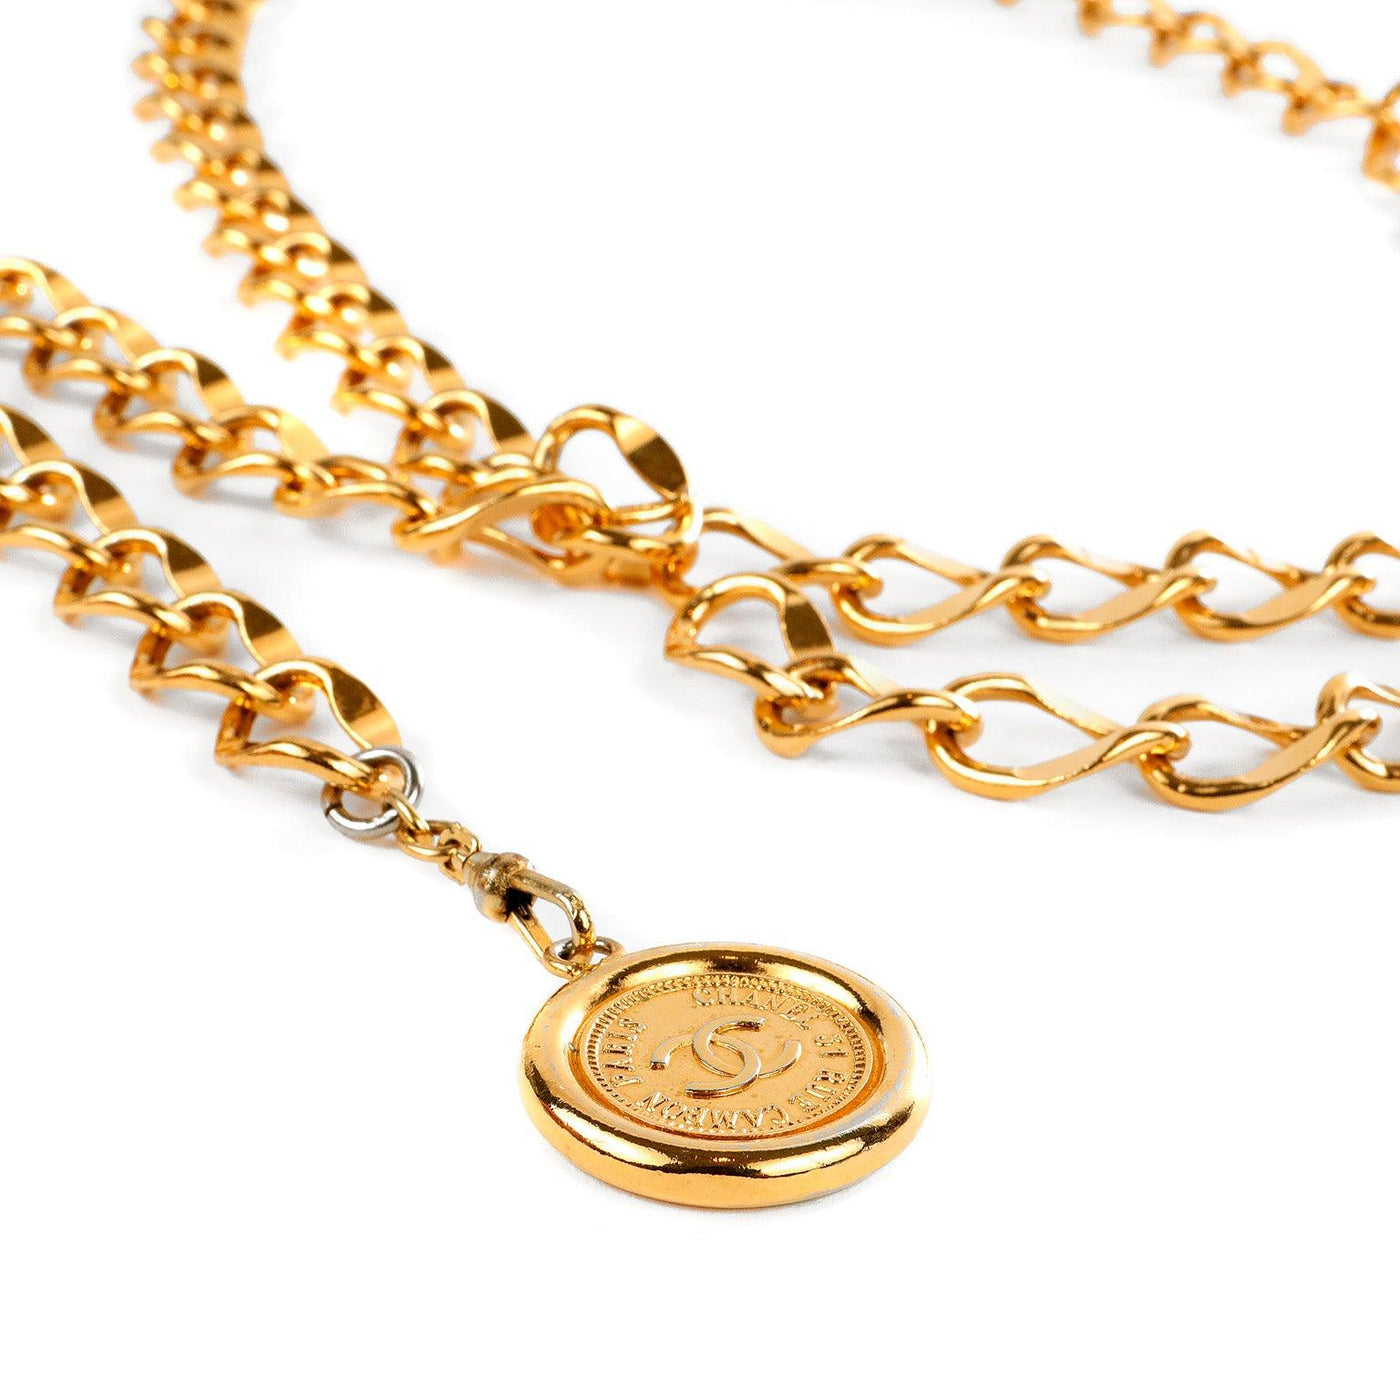 Chanel 24kt Gold Plated Byzantine Single Link Belt - Only Authentics